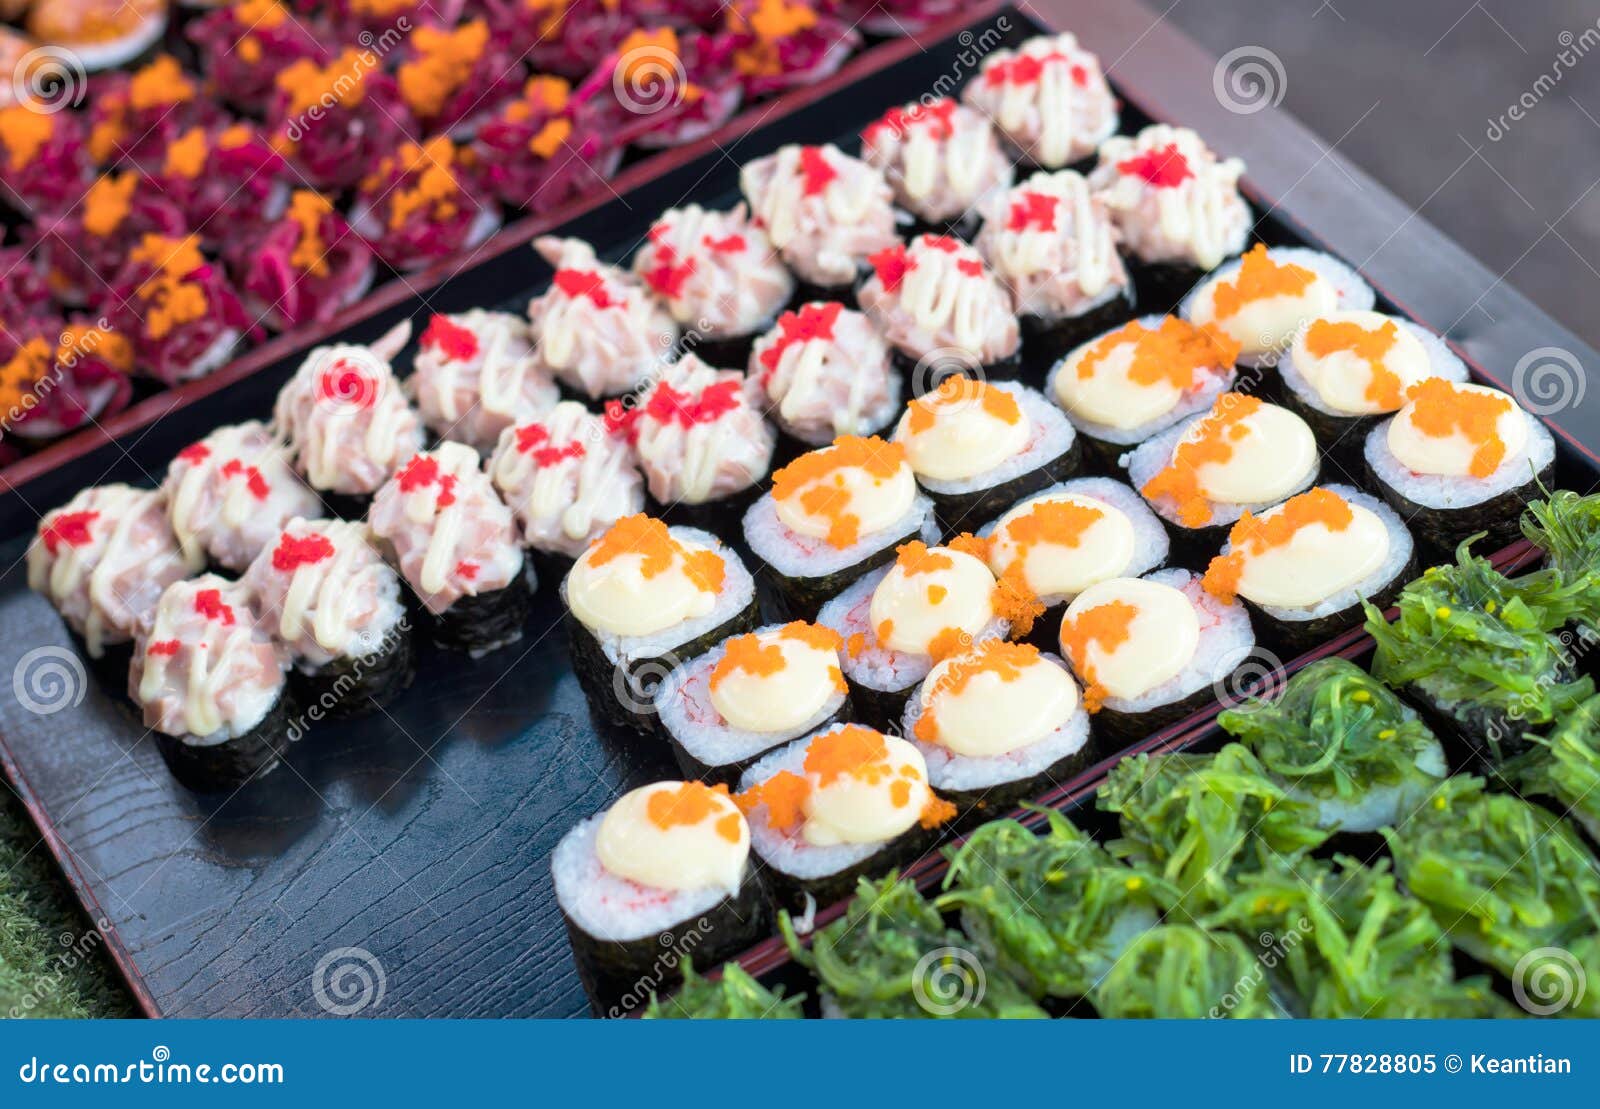 Candy Sushi: A tray of colorful candy shaped like sushi.